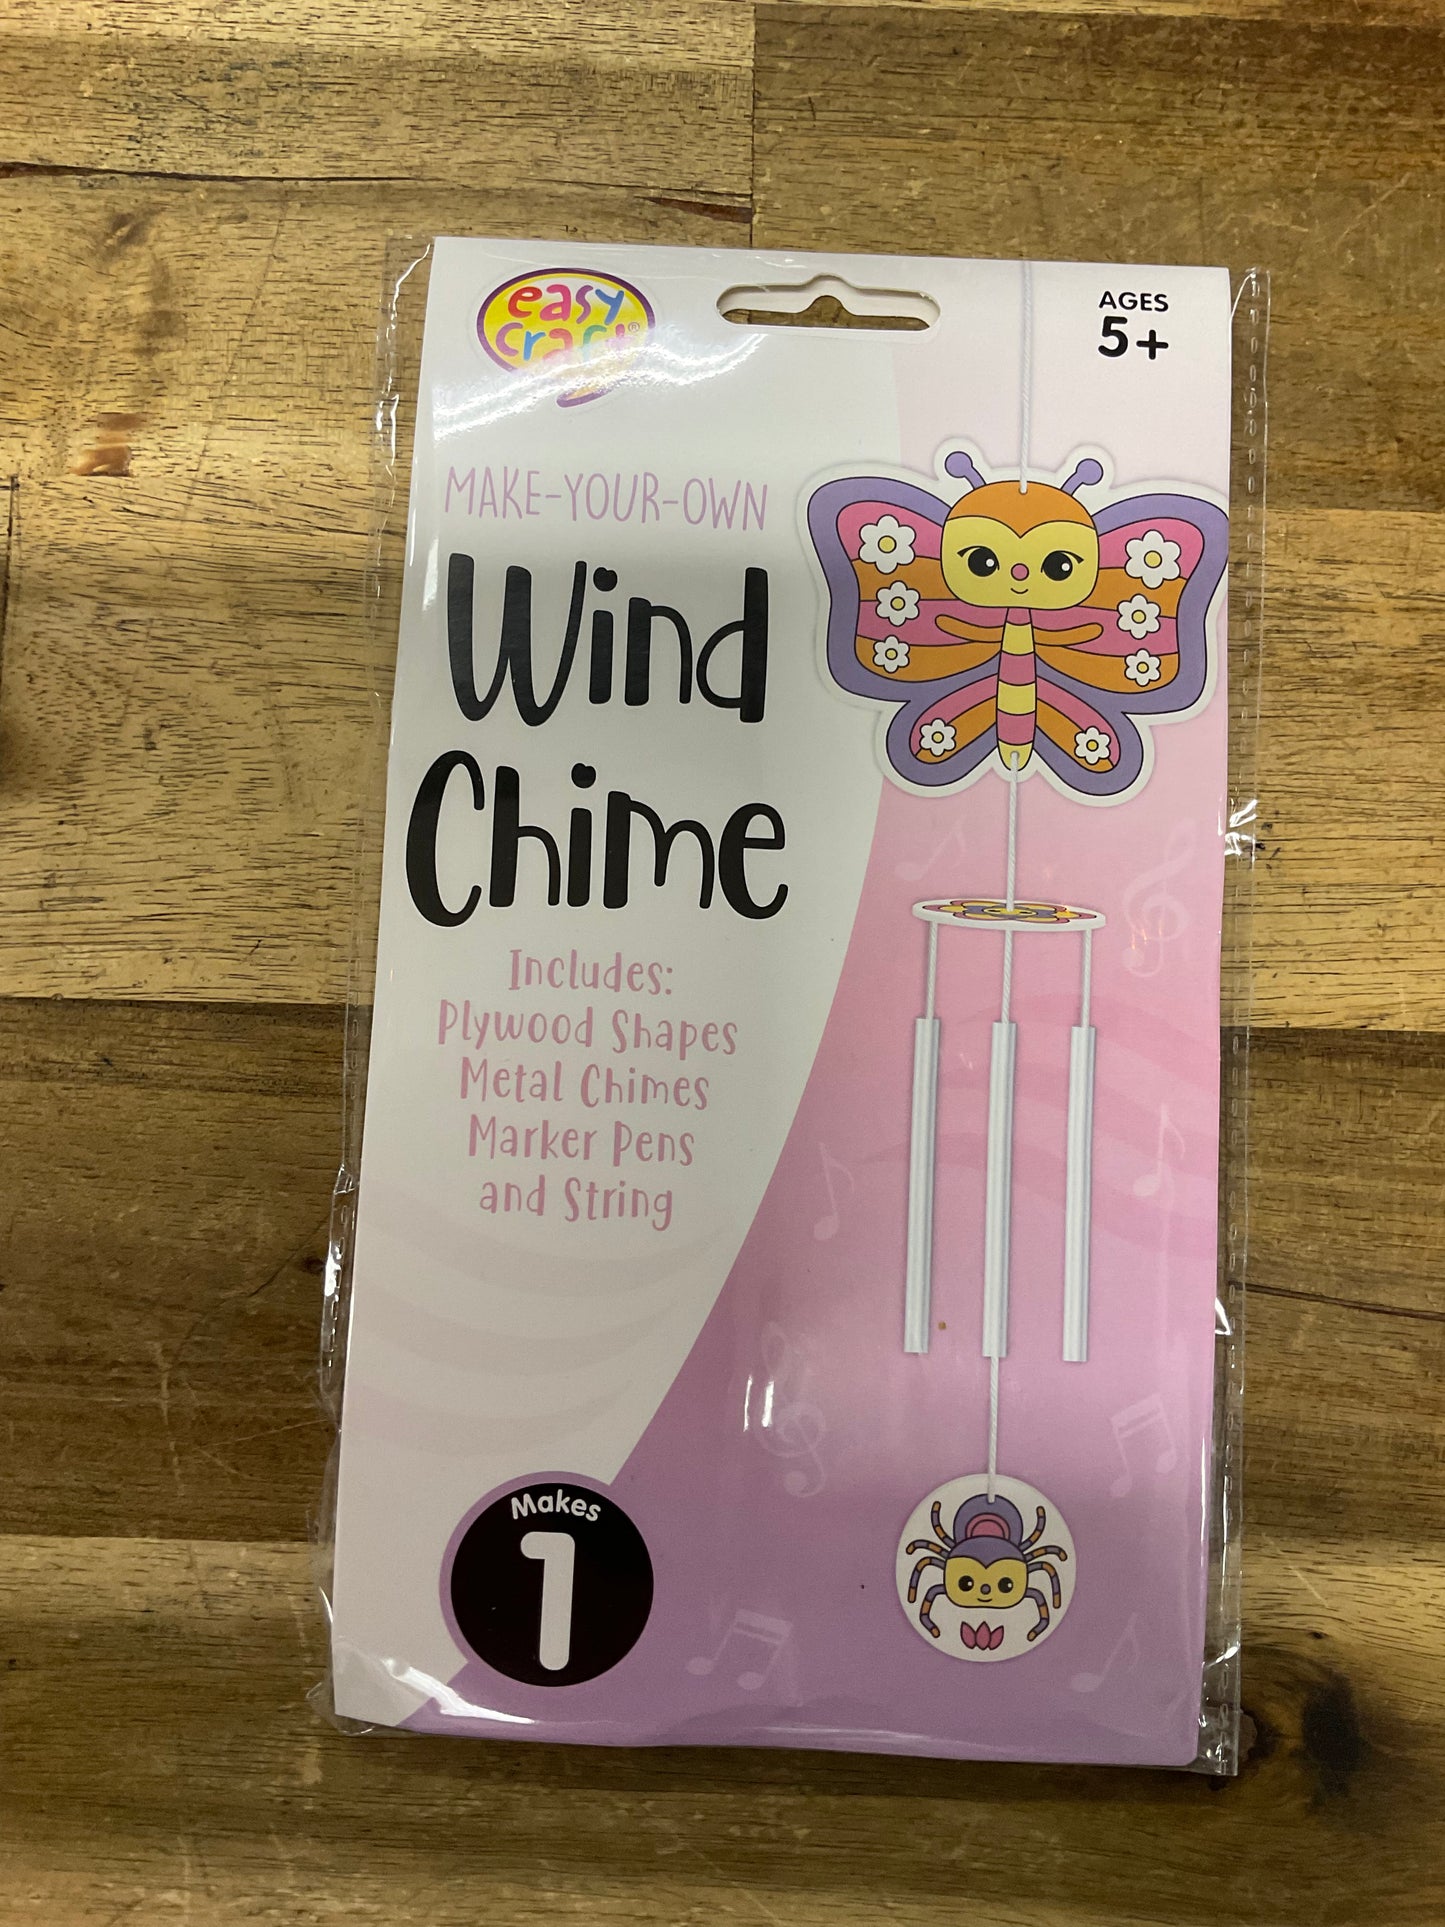 Wind Chime Craft Kit